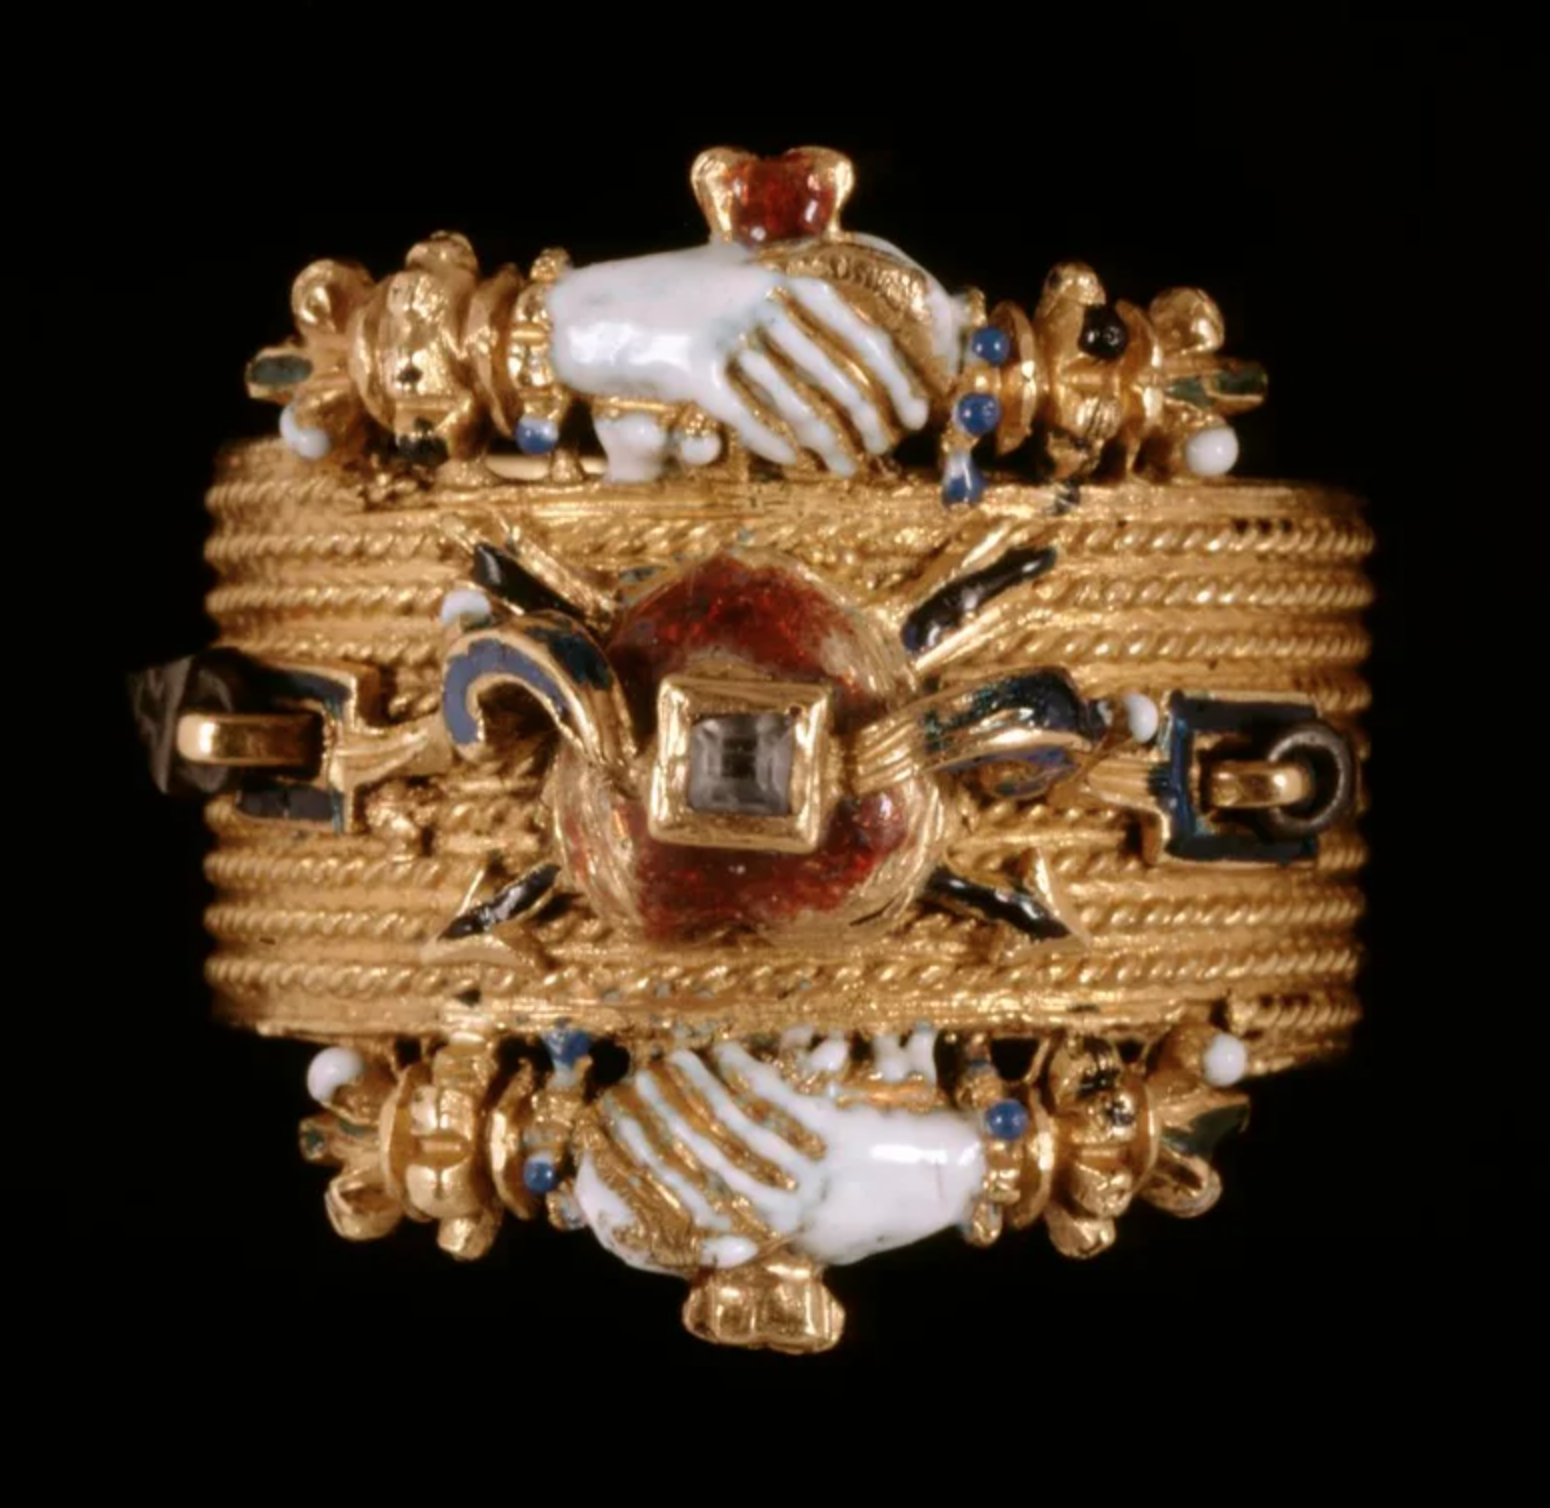 fascinating artifacts - Gold and enamel ring